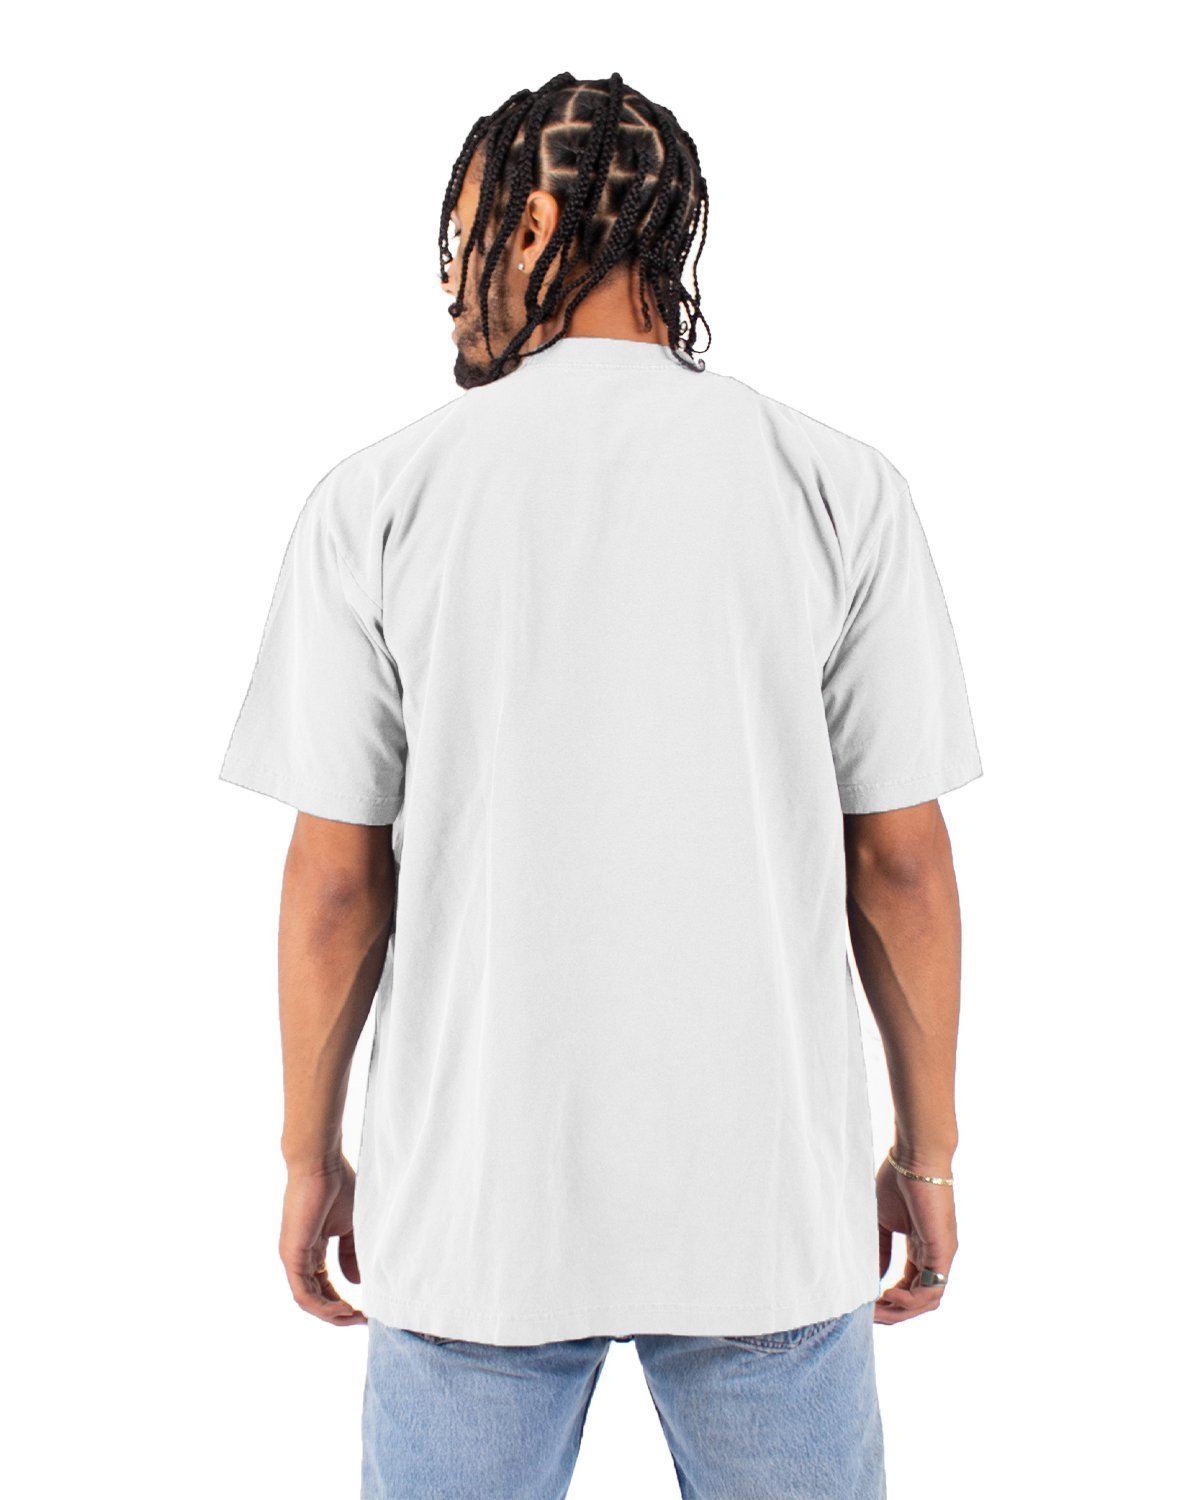 Shaka Wear Garment Dye White Heavyweight T-Shirt